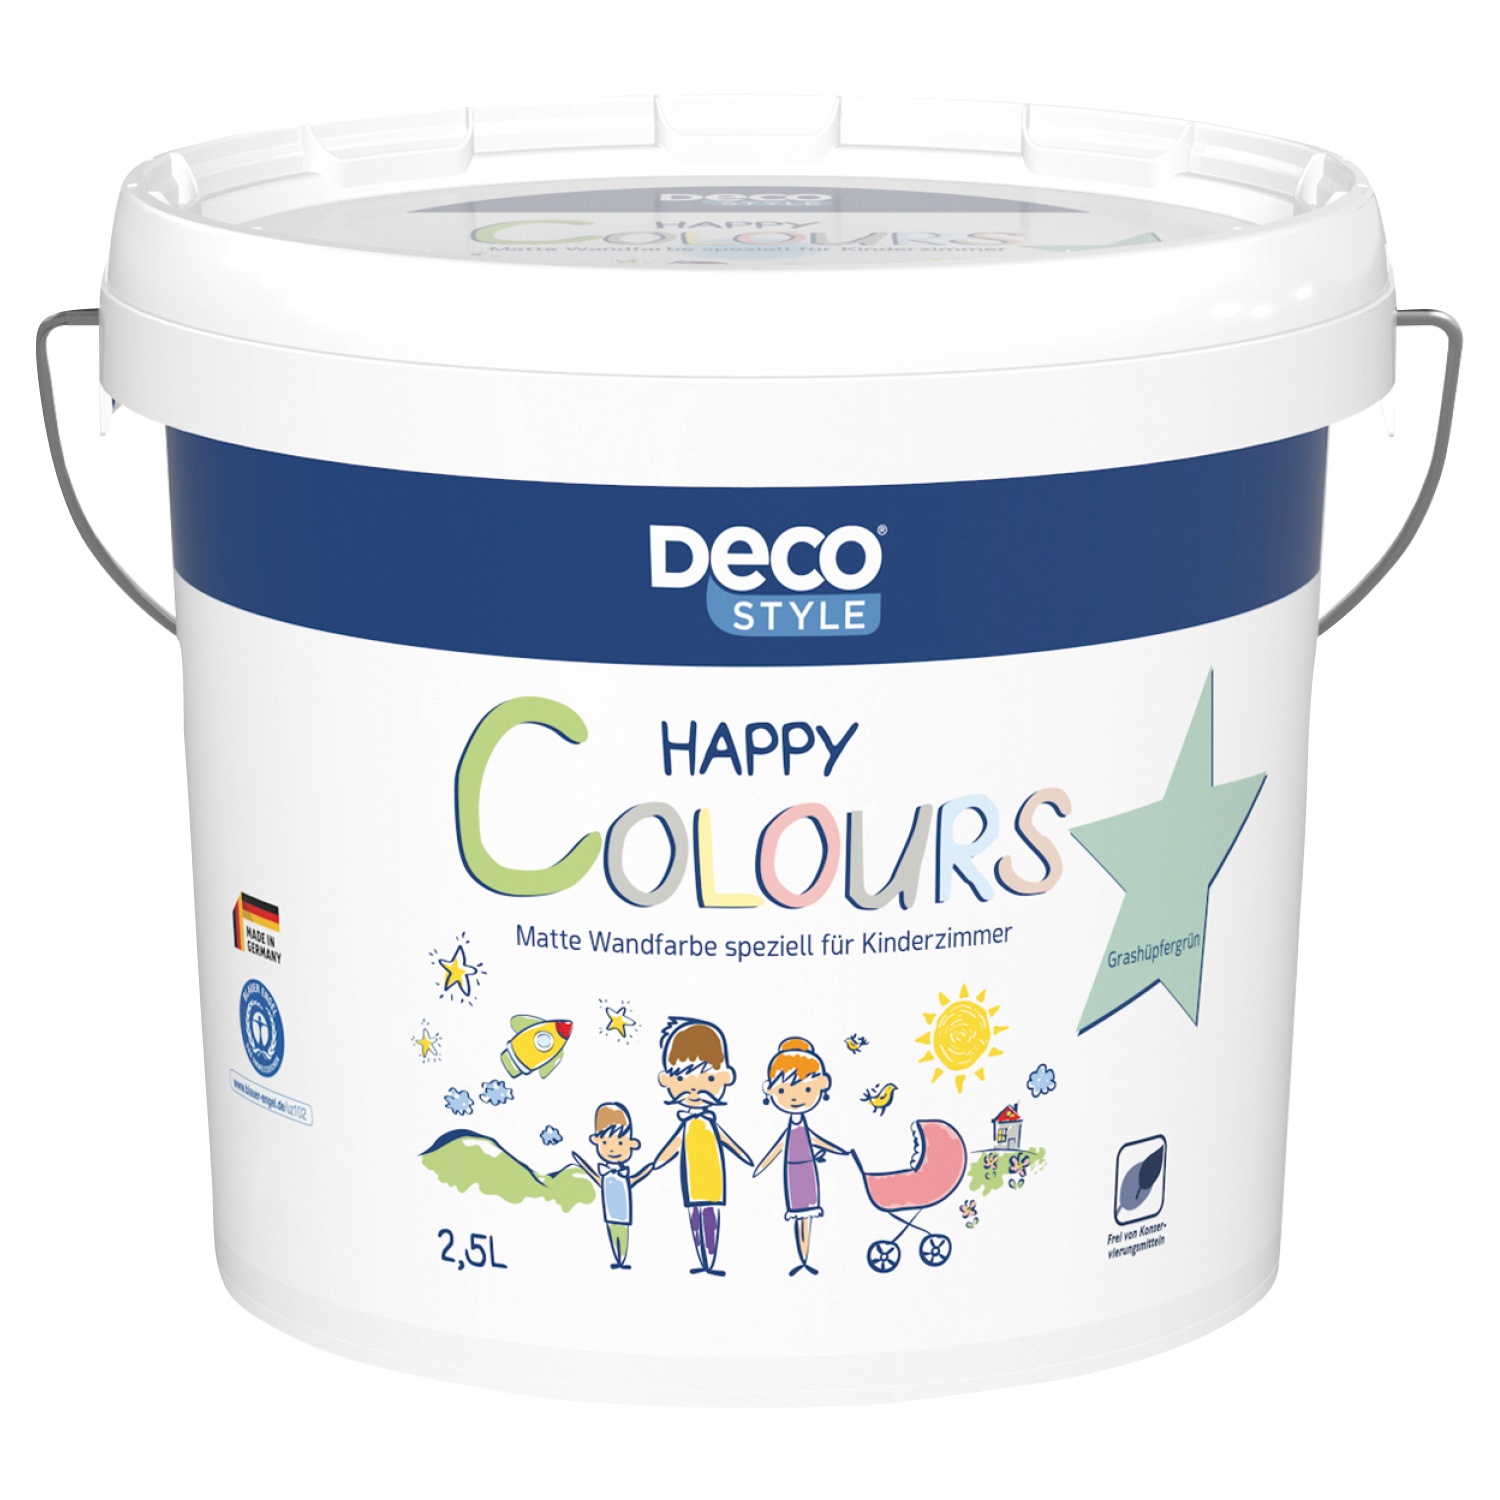 DECO STYLE® Wandfarbe Happy Colours im 2,5l